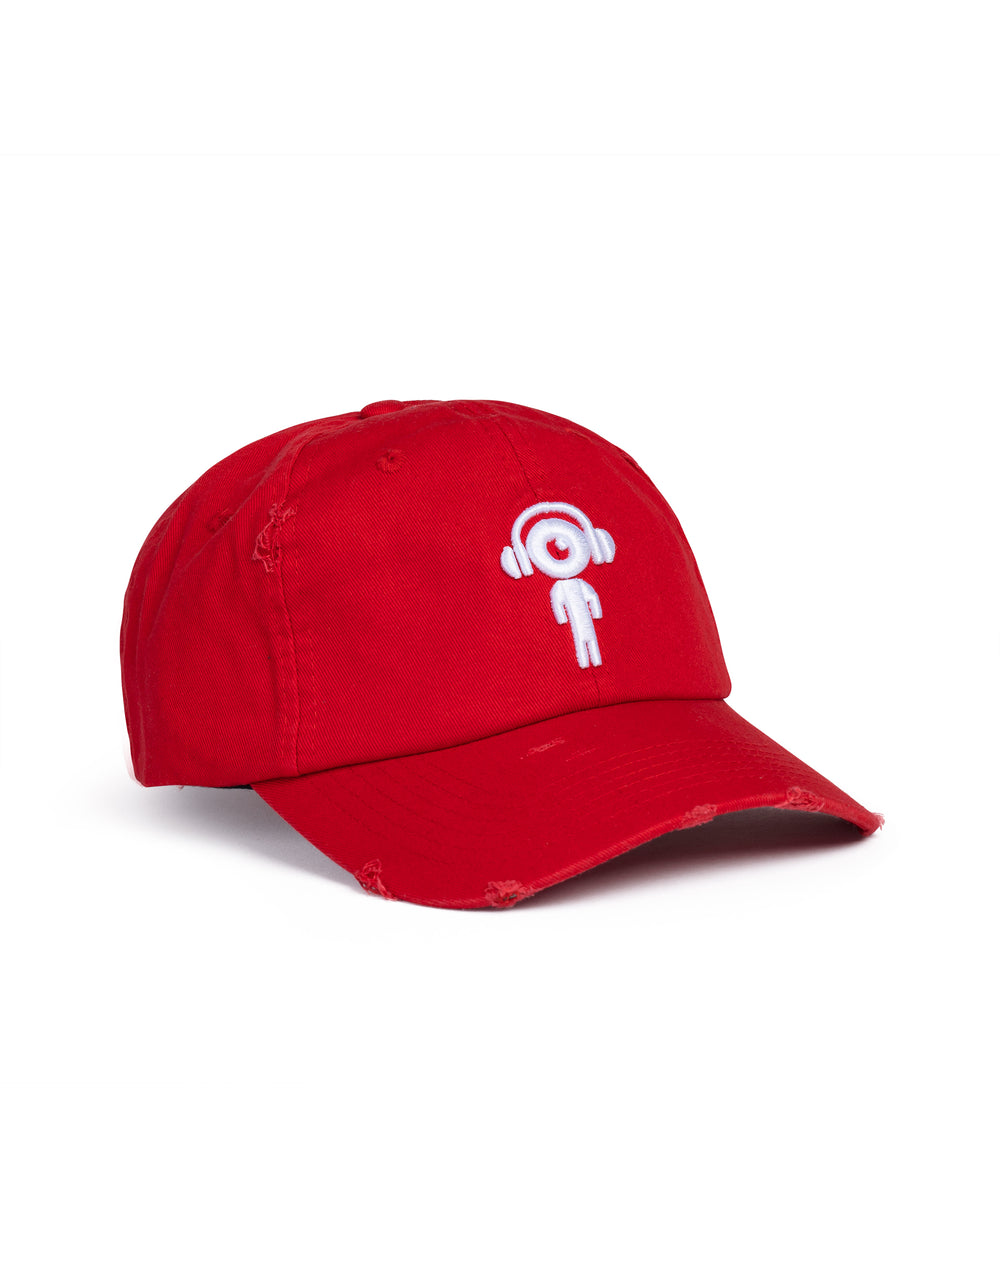 DJ TRI - Distressed Dad Hat in RED